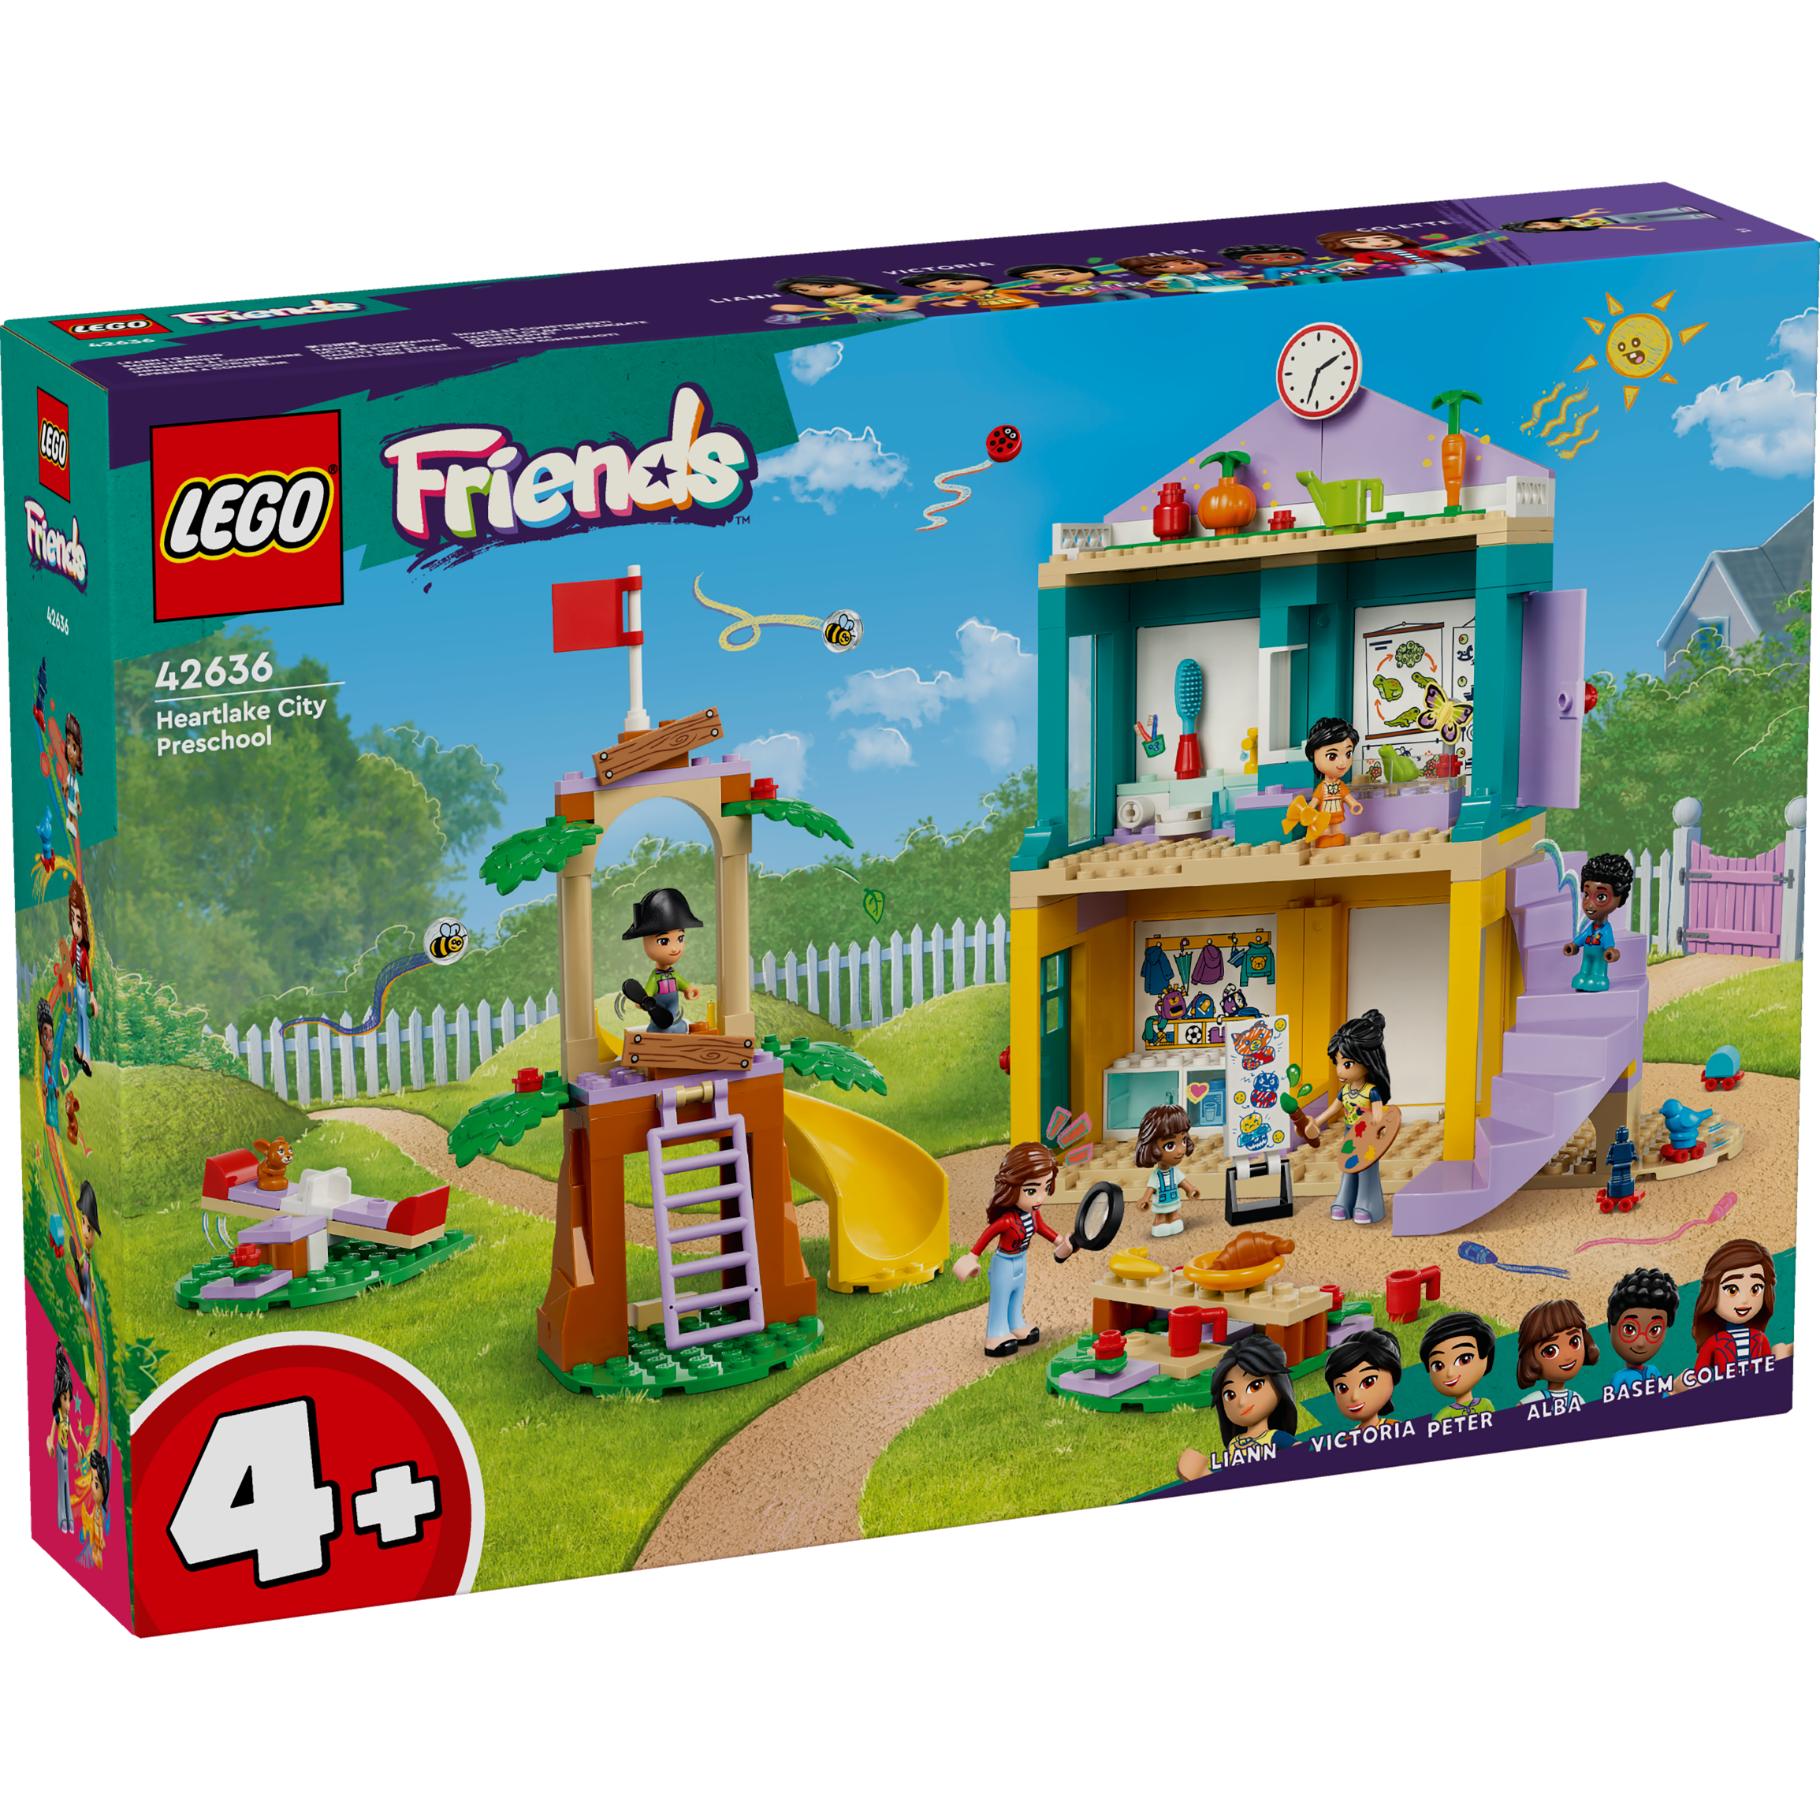 Top1Toys LEGO 42636 Friends Heartlake City Kleuterschool